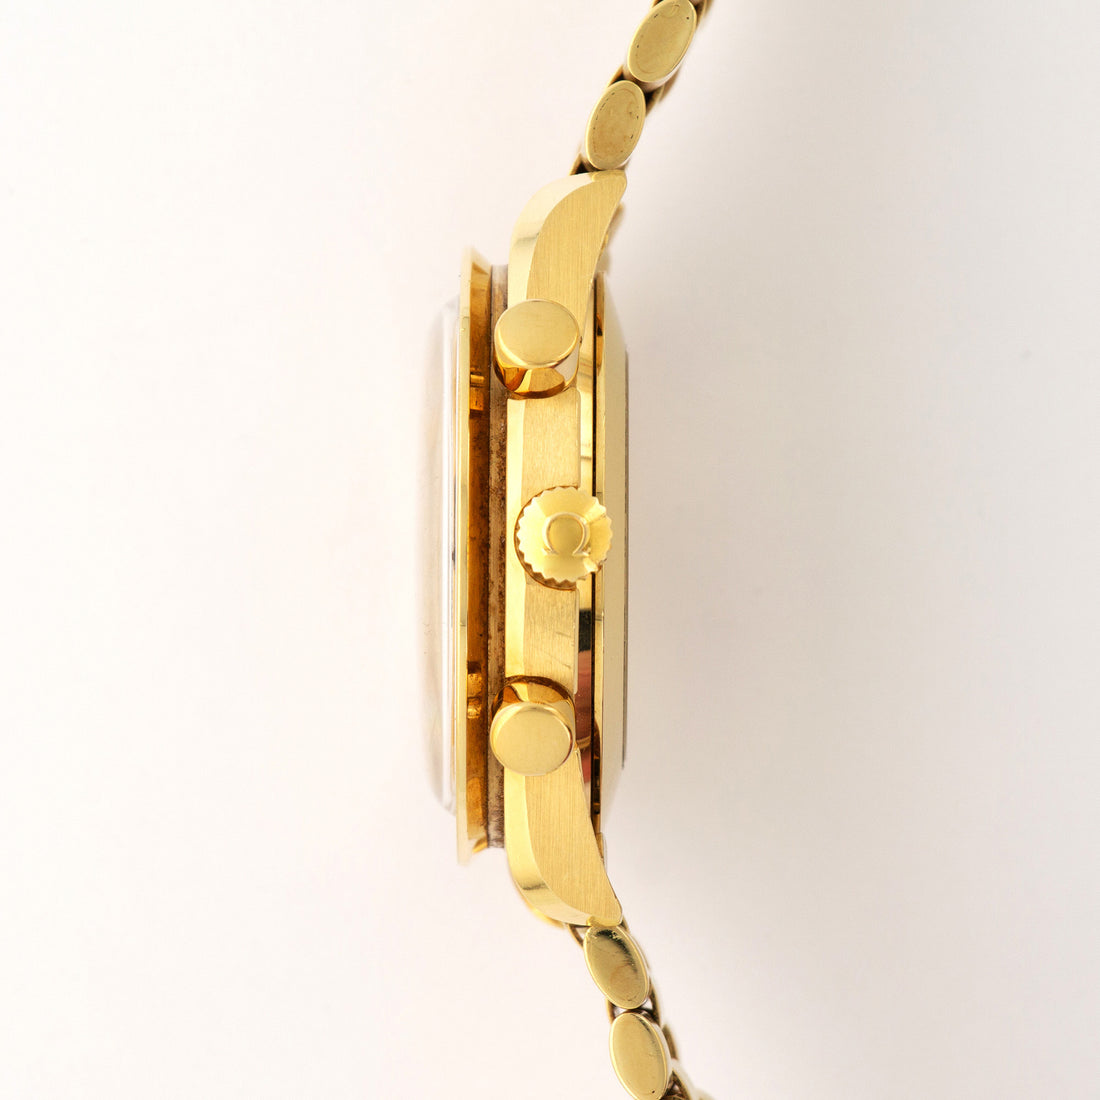 Omega Yellow Gold Speedmaster Watch, ref. 3551.20